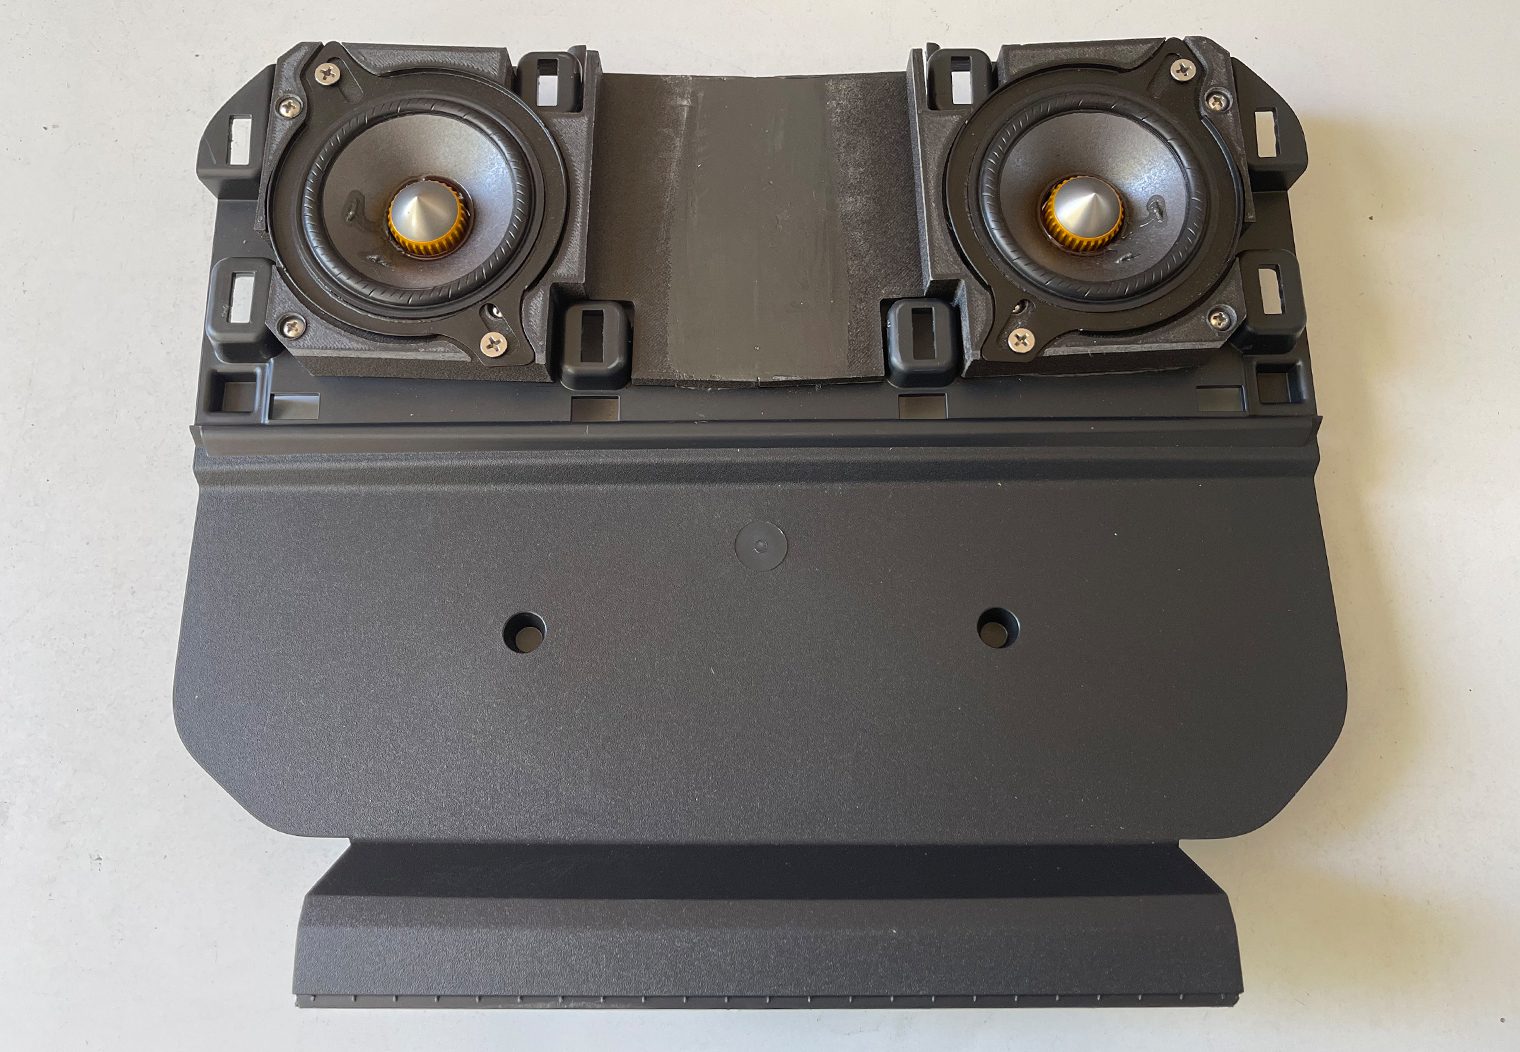 2021 F-150 Custom Center Dash Speaker Panel Final Product Top